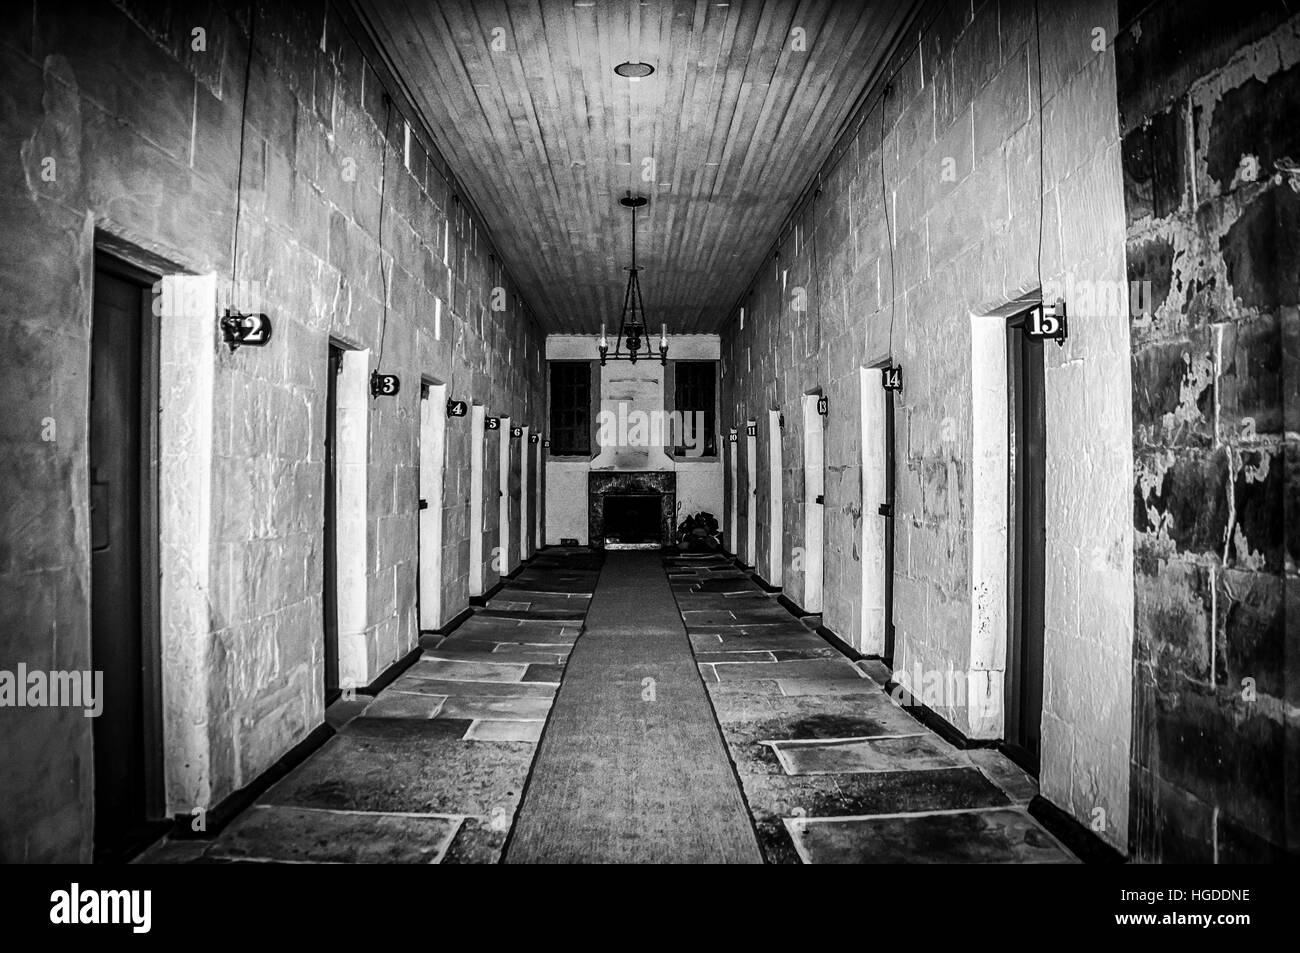 Port Arthur Penal Colony Prison Interior in Tasmania, Australia Stock Photo